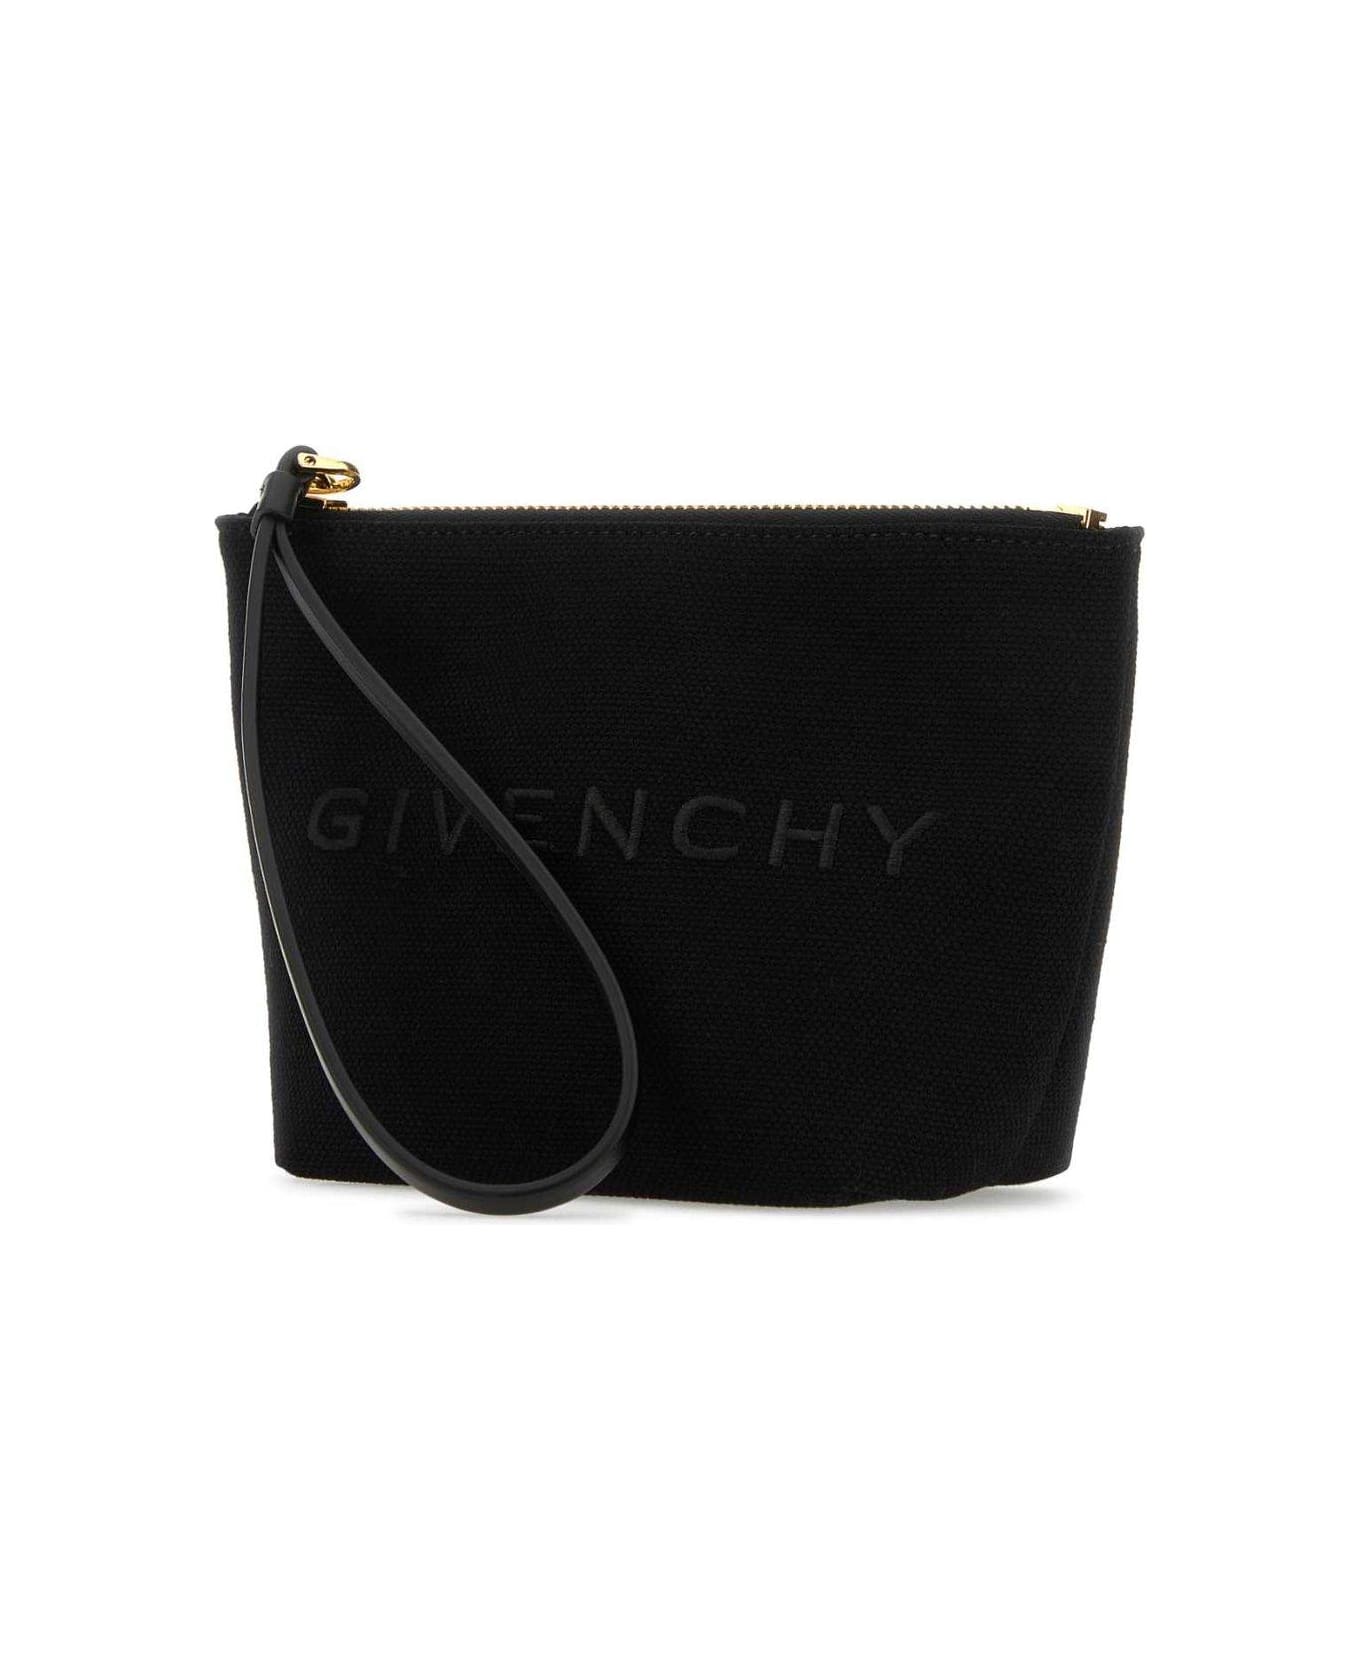 Givenchy Logo Printed Zipped Clutch Bag - Black